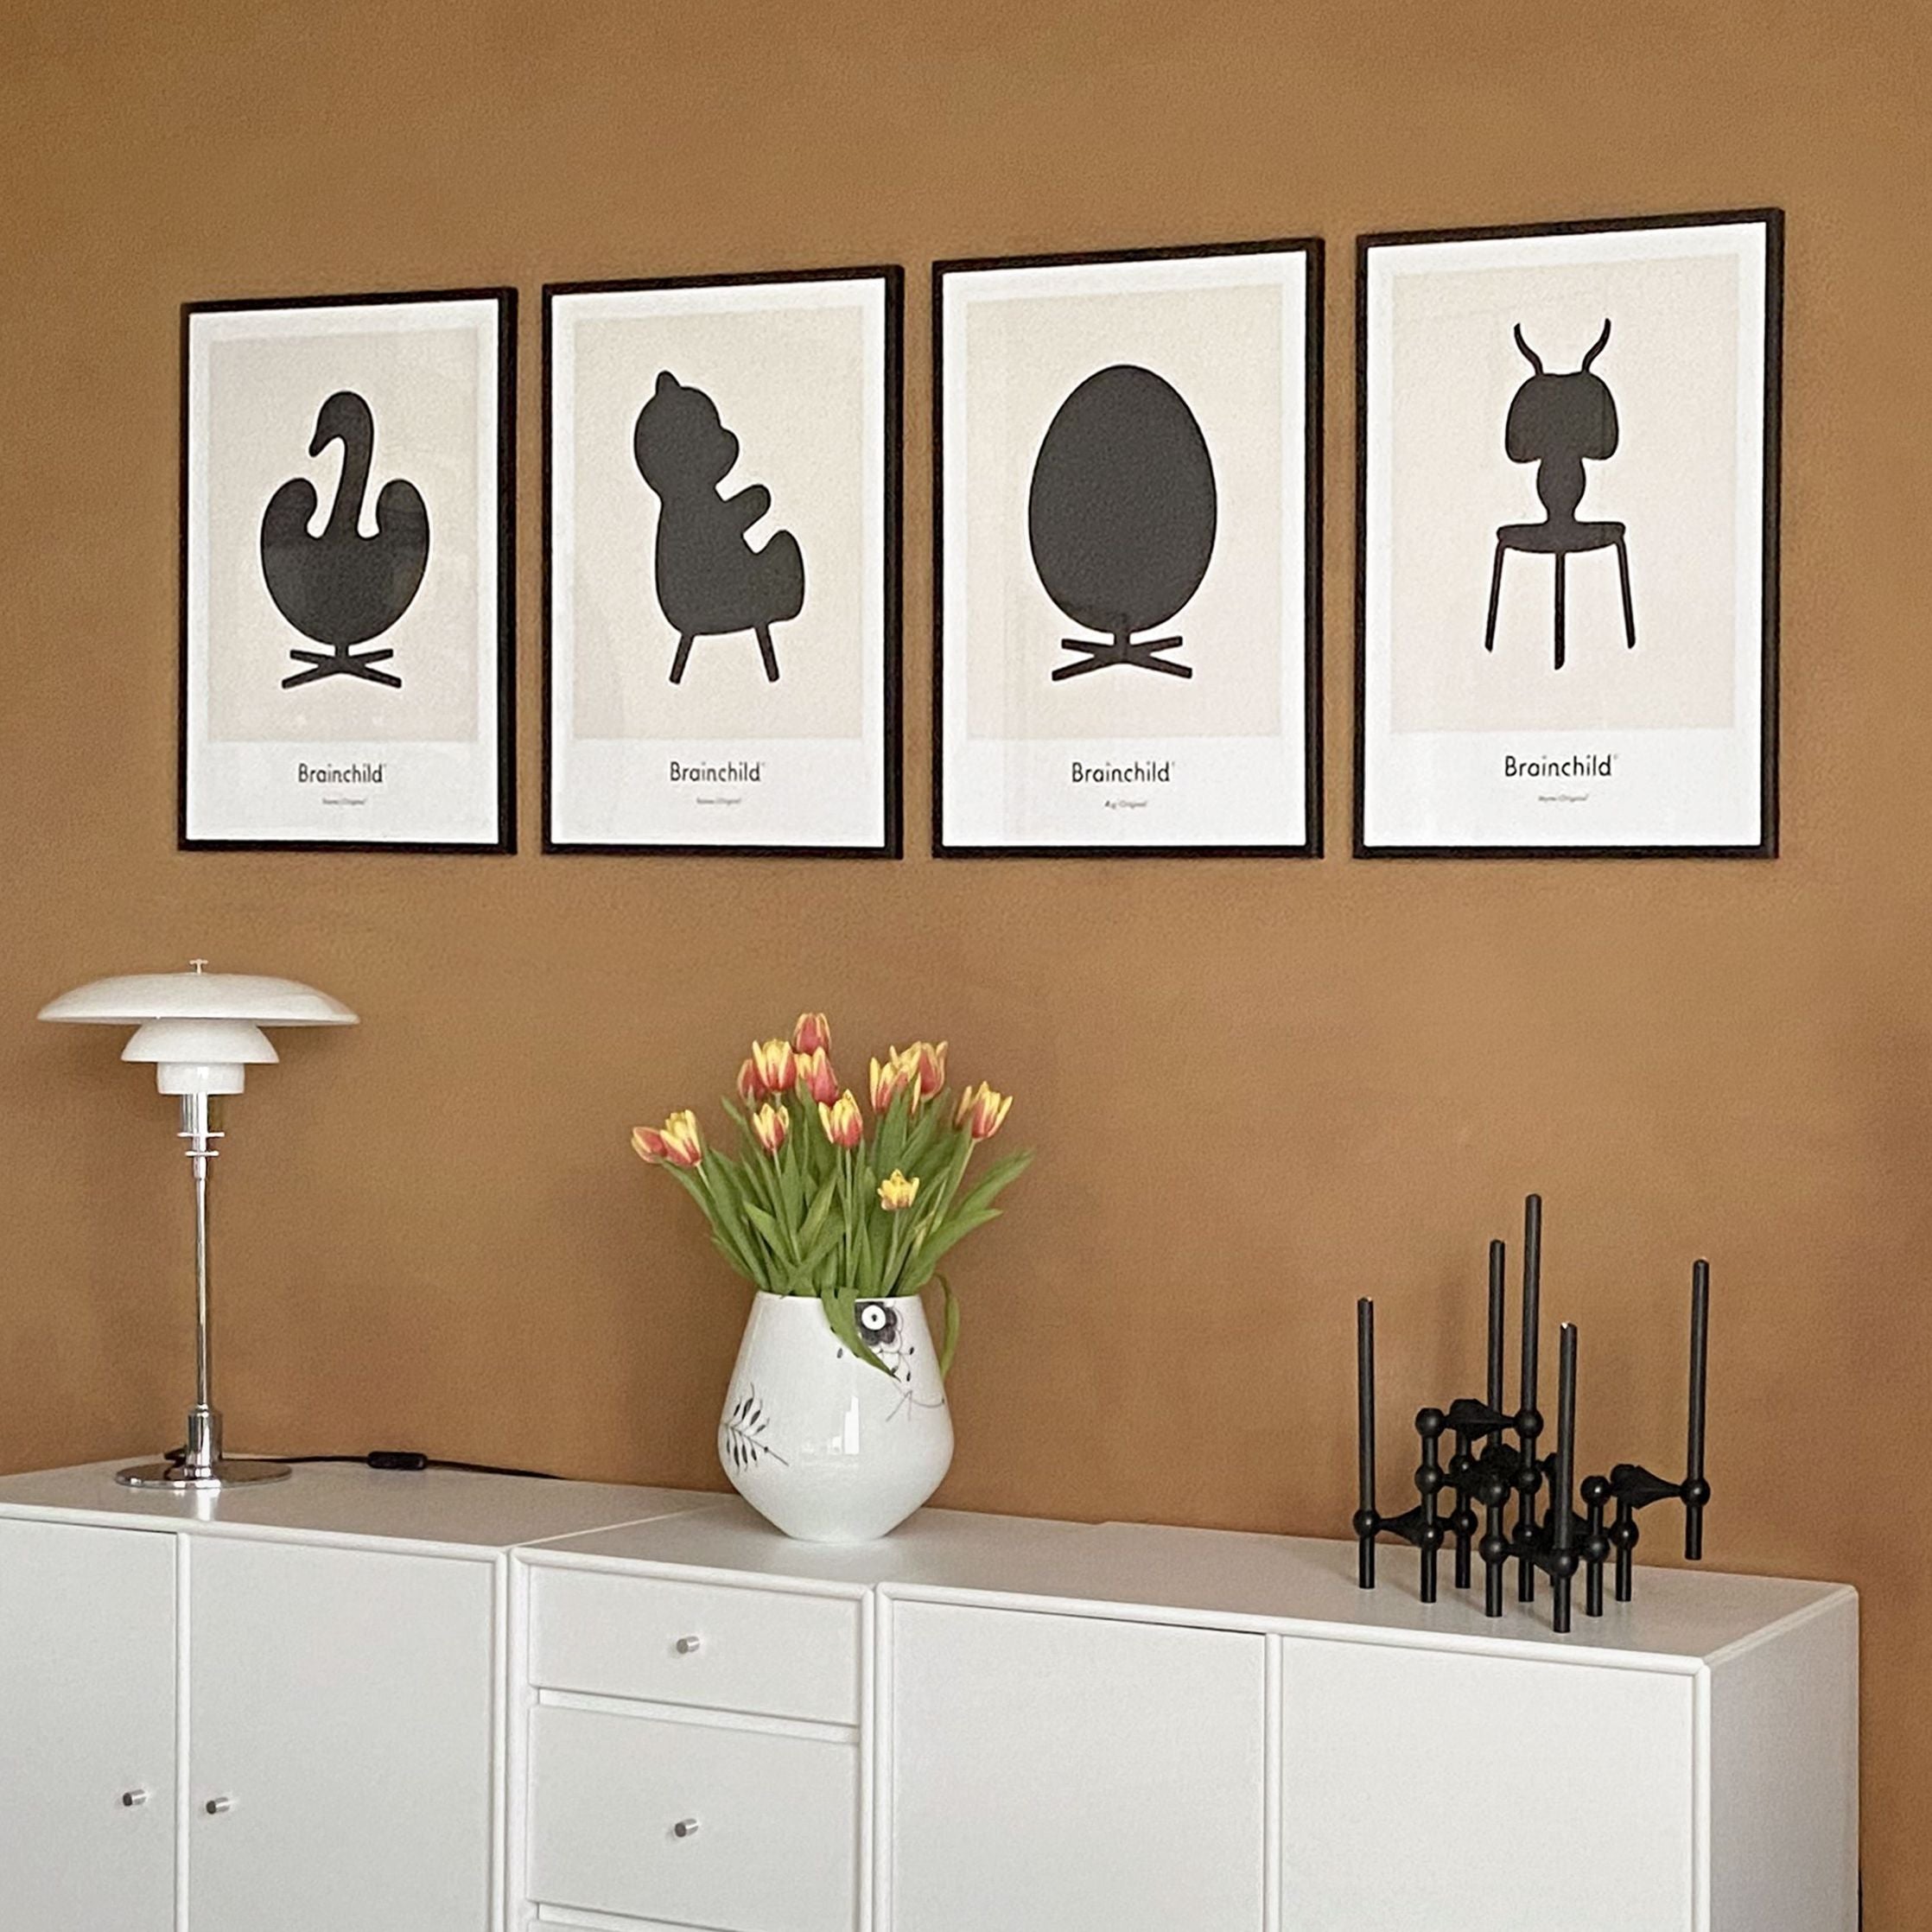 Brainchild Ant Design Icon Poster, Frame Made Of Dark Wood 50x70 Cm, Grey